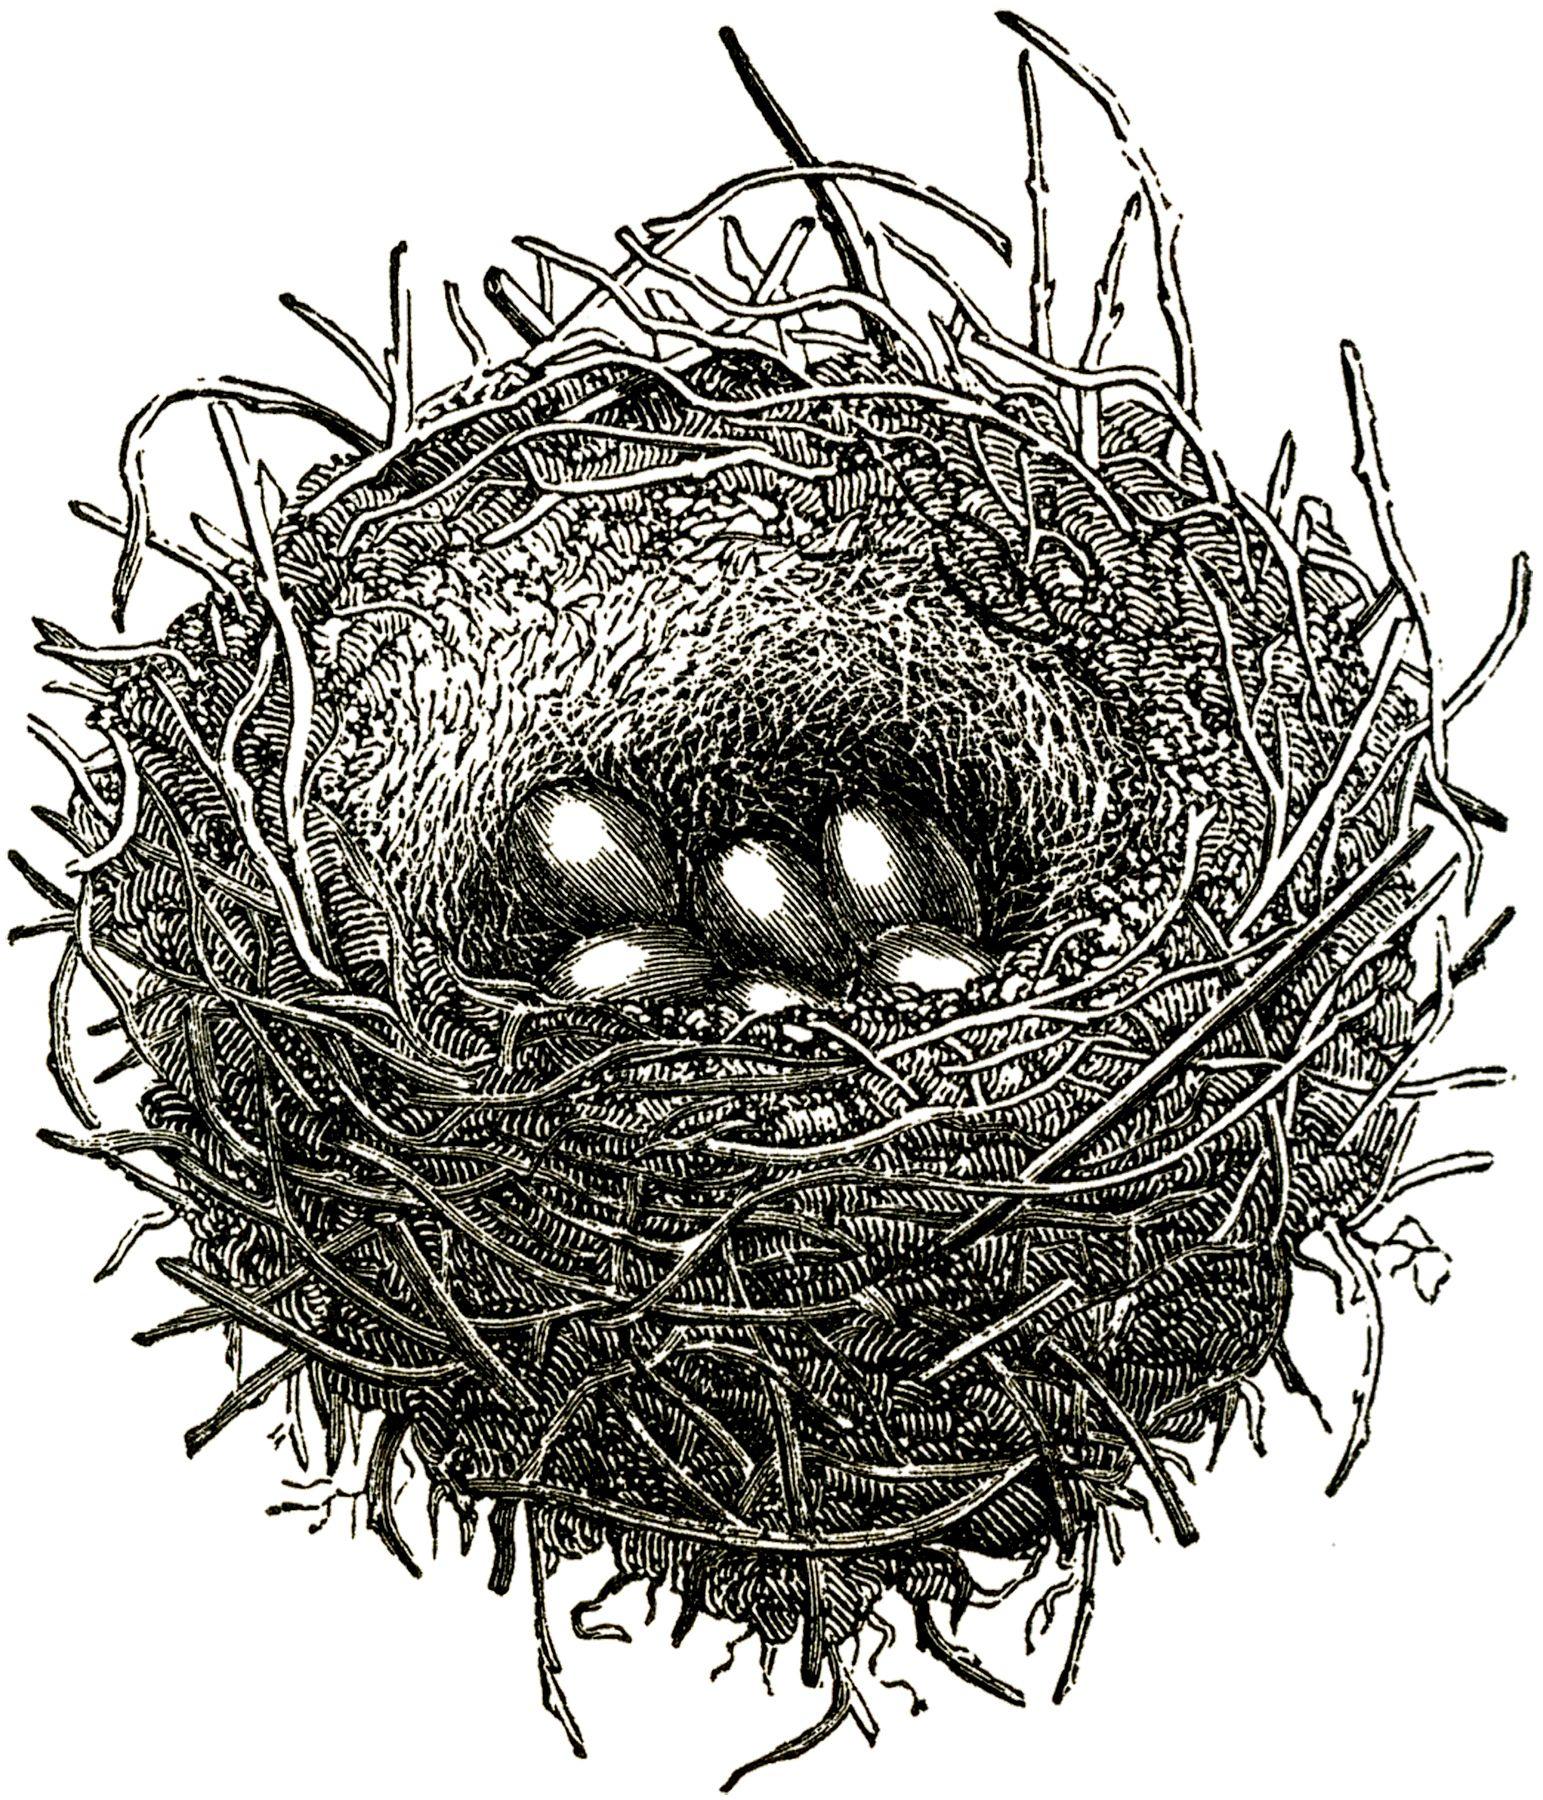 Birdsnest Black and White Logo - Sweet Public Domain Bird Nest Image! Graphics Fairy